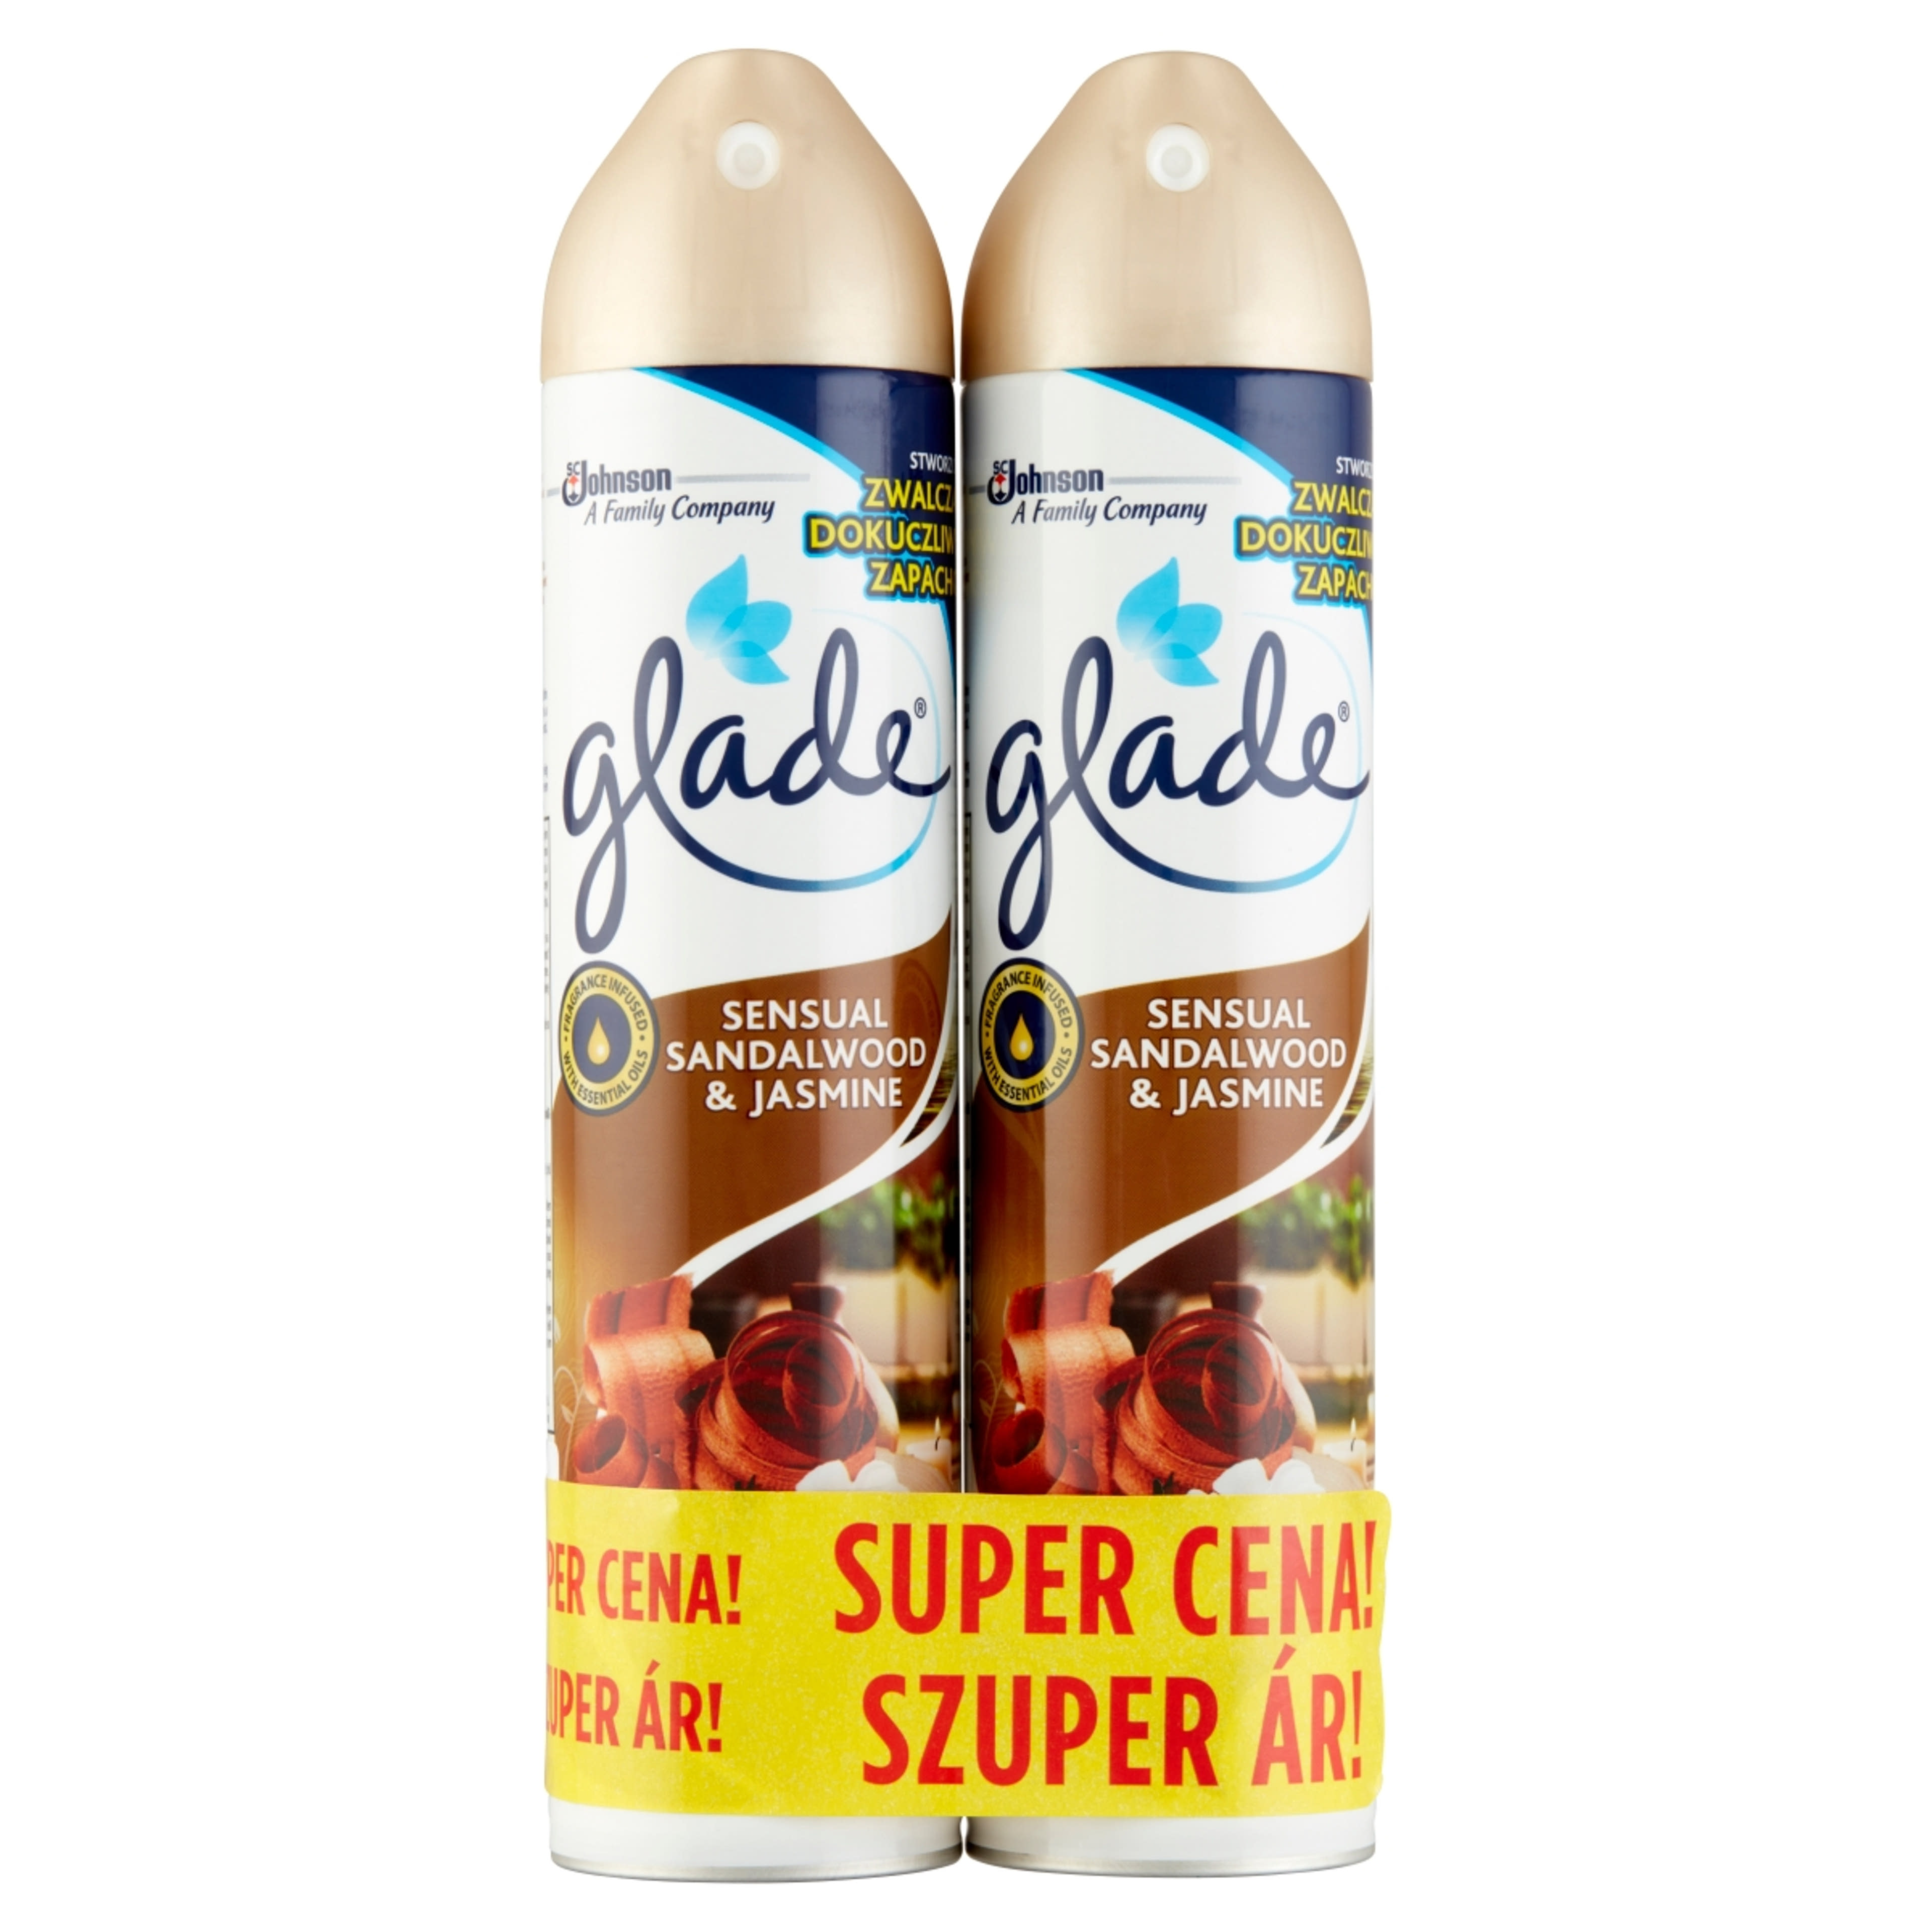 Glade Bali szantálfa duo pack (2x300) - 600 ml